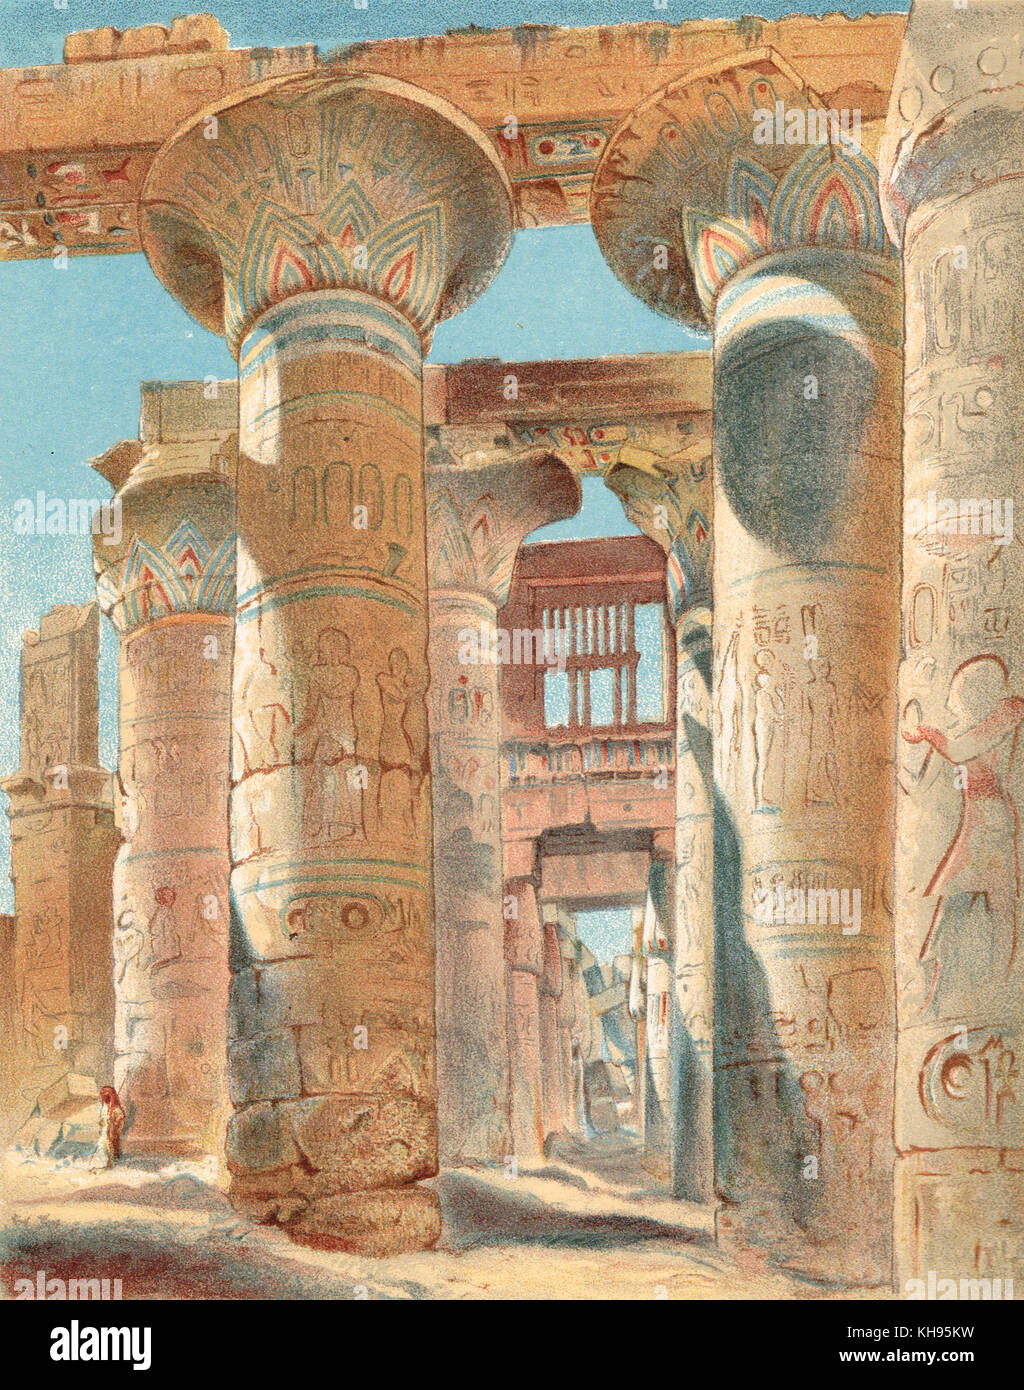 Gran sala hipóstila salen, karnak, Egipto, siglo xix litografía de color Foto de stock